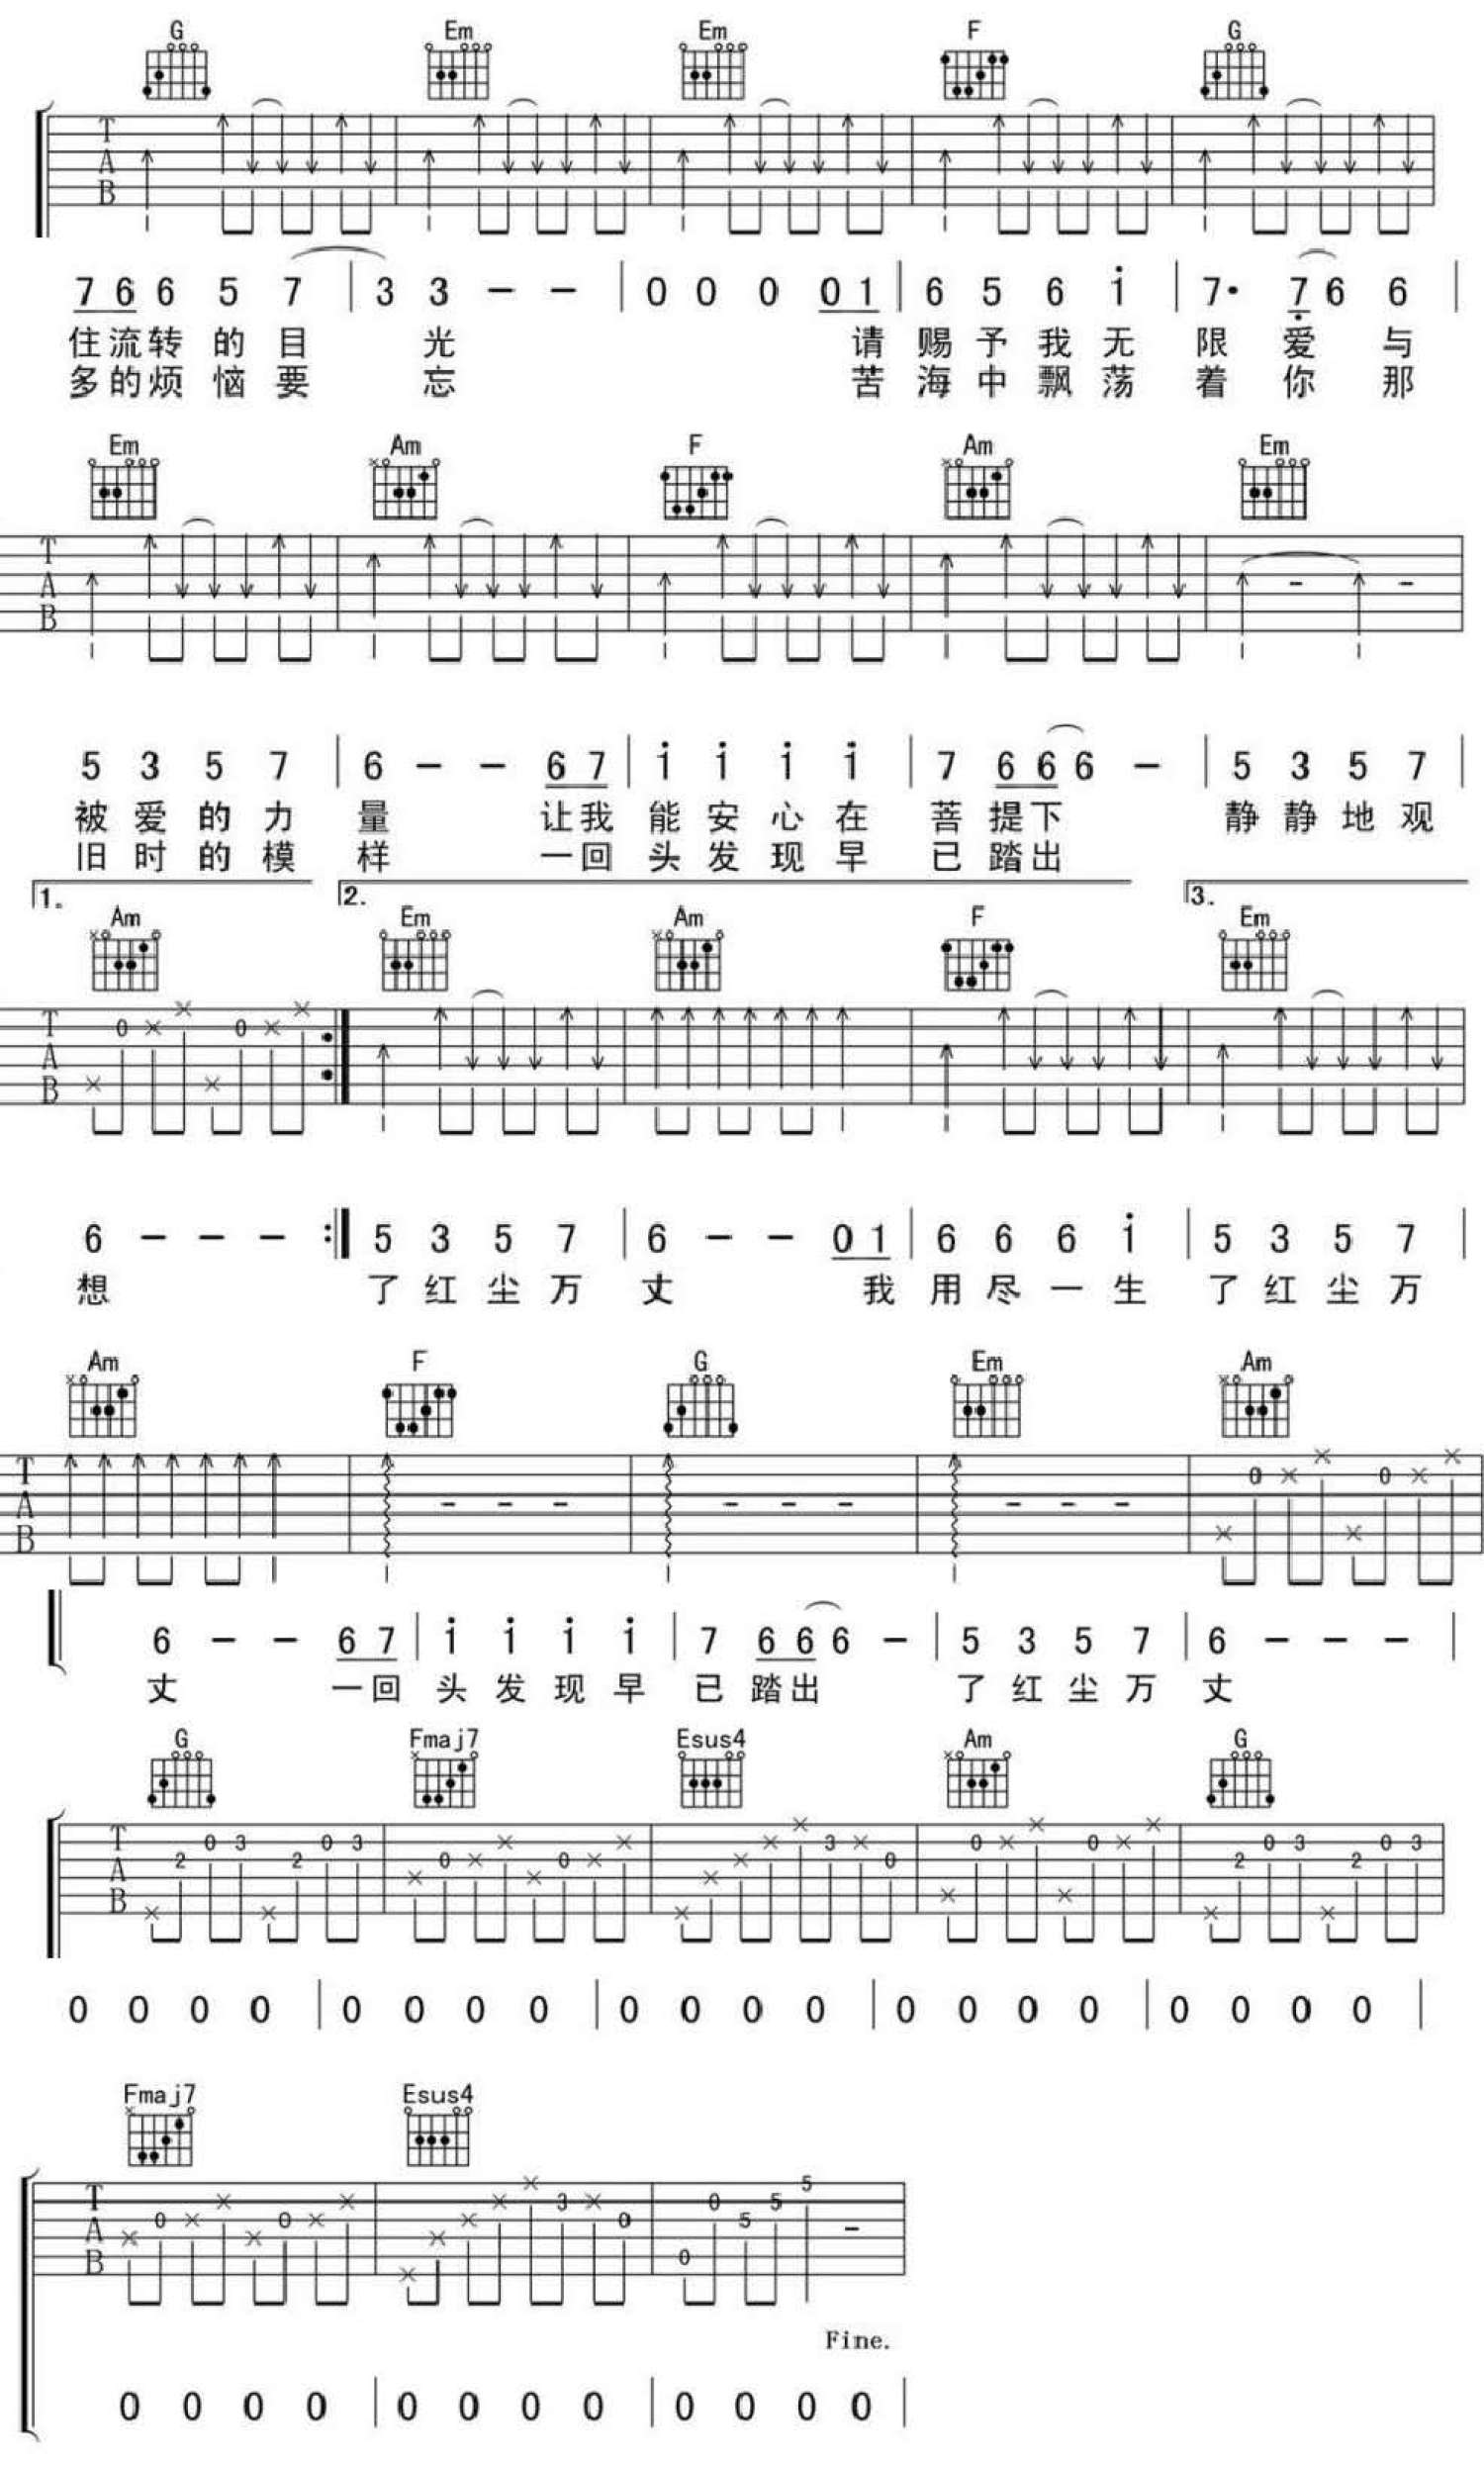 red吉他谱简单版,《d》吉他,泰勒d吉他扫弦版(第10页)_大山谷图库